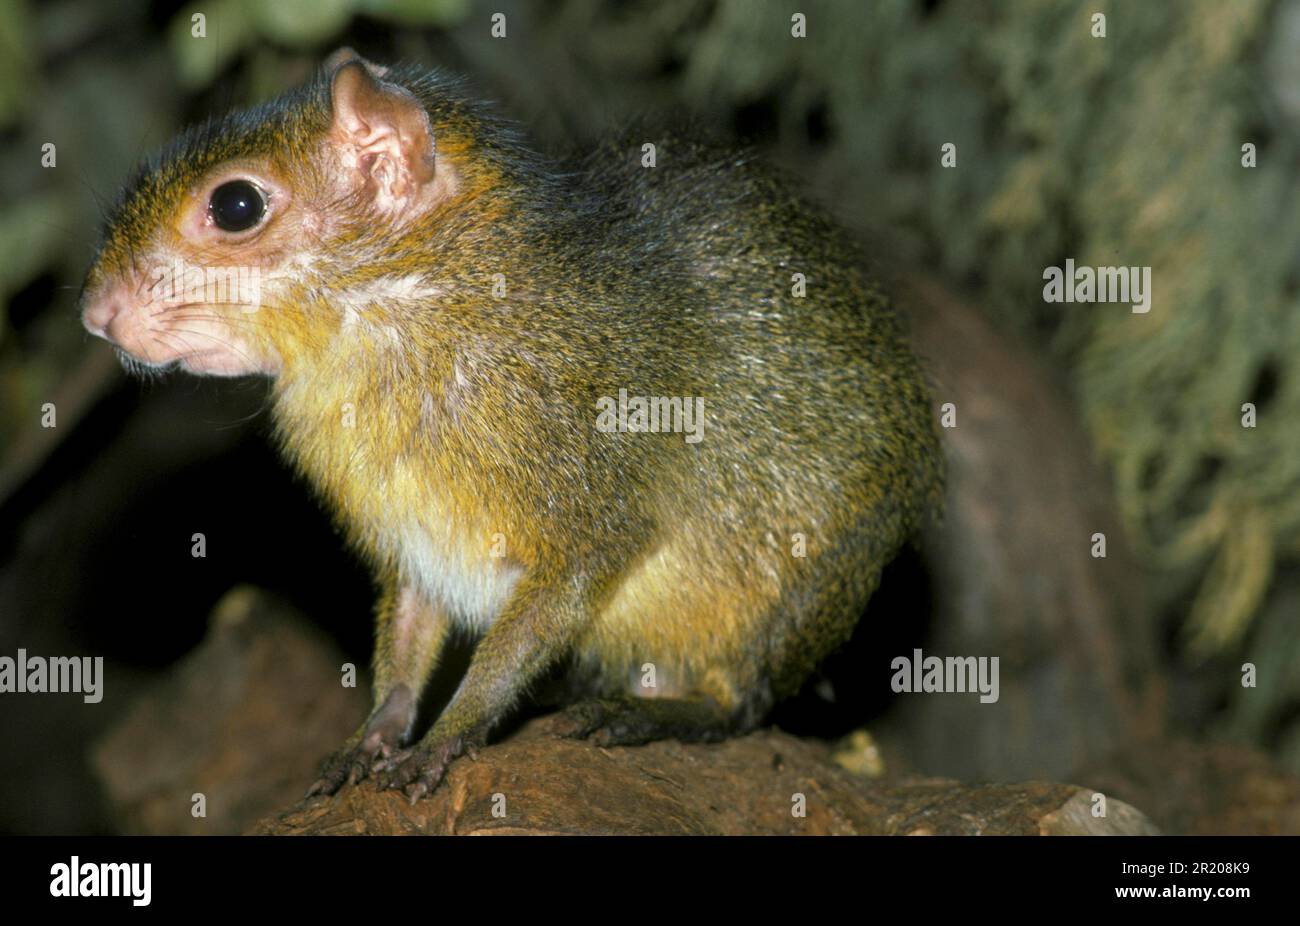 Green acouchi (Myoprocta pratti), Dwarf Acouchi, Green Acouchis, Dwarf Acouchis, Rodents, Mammals, Animals, Acouchy captive Stock Photo